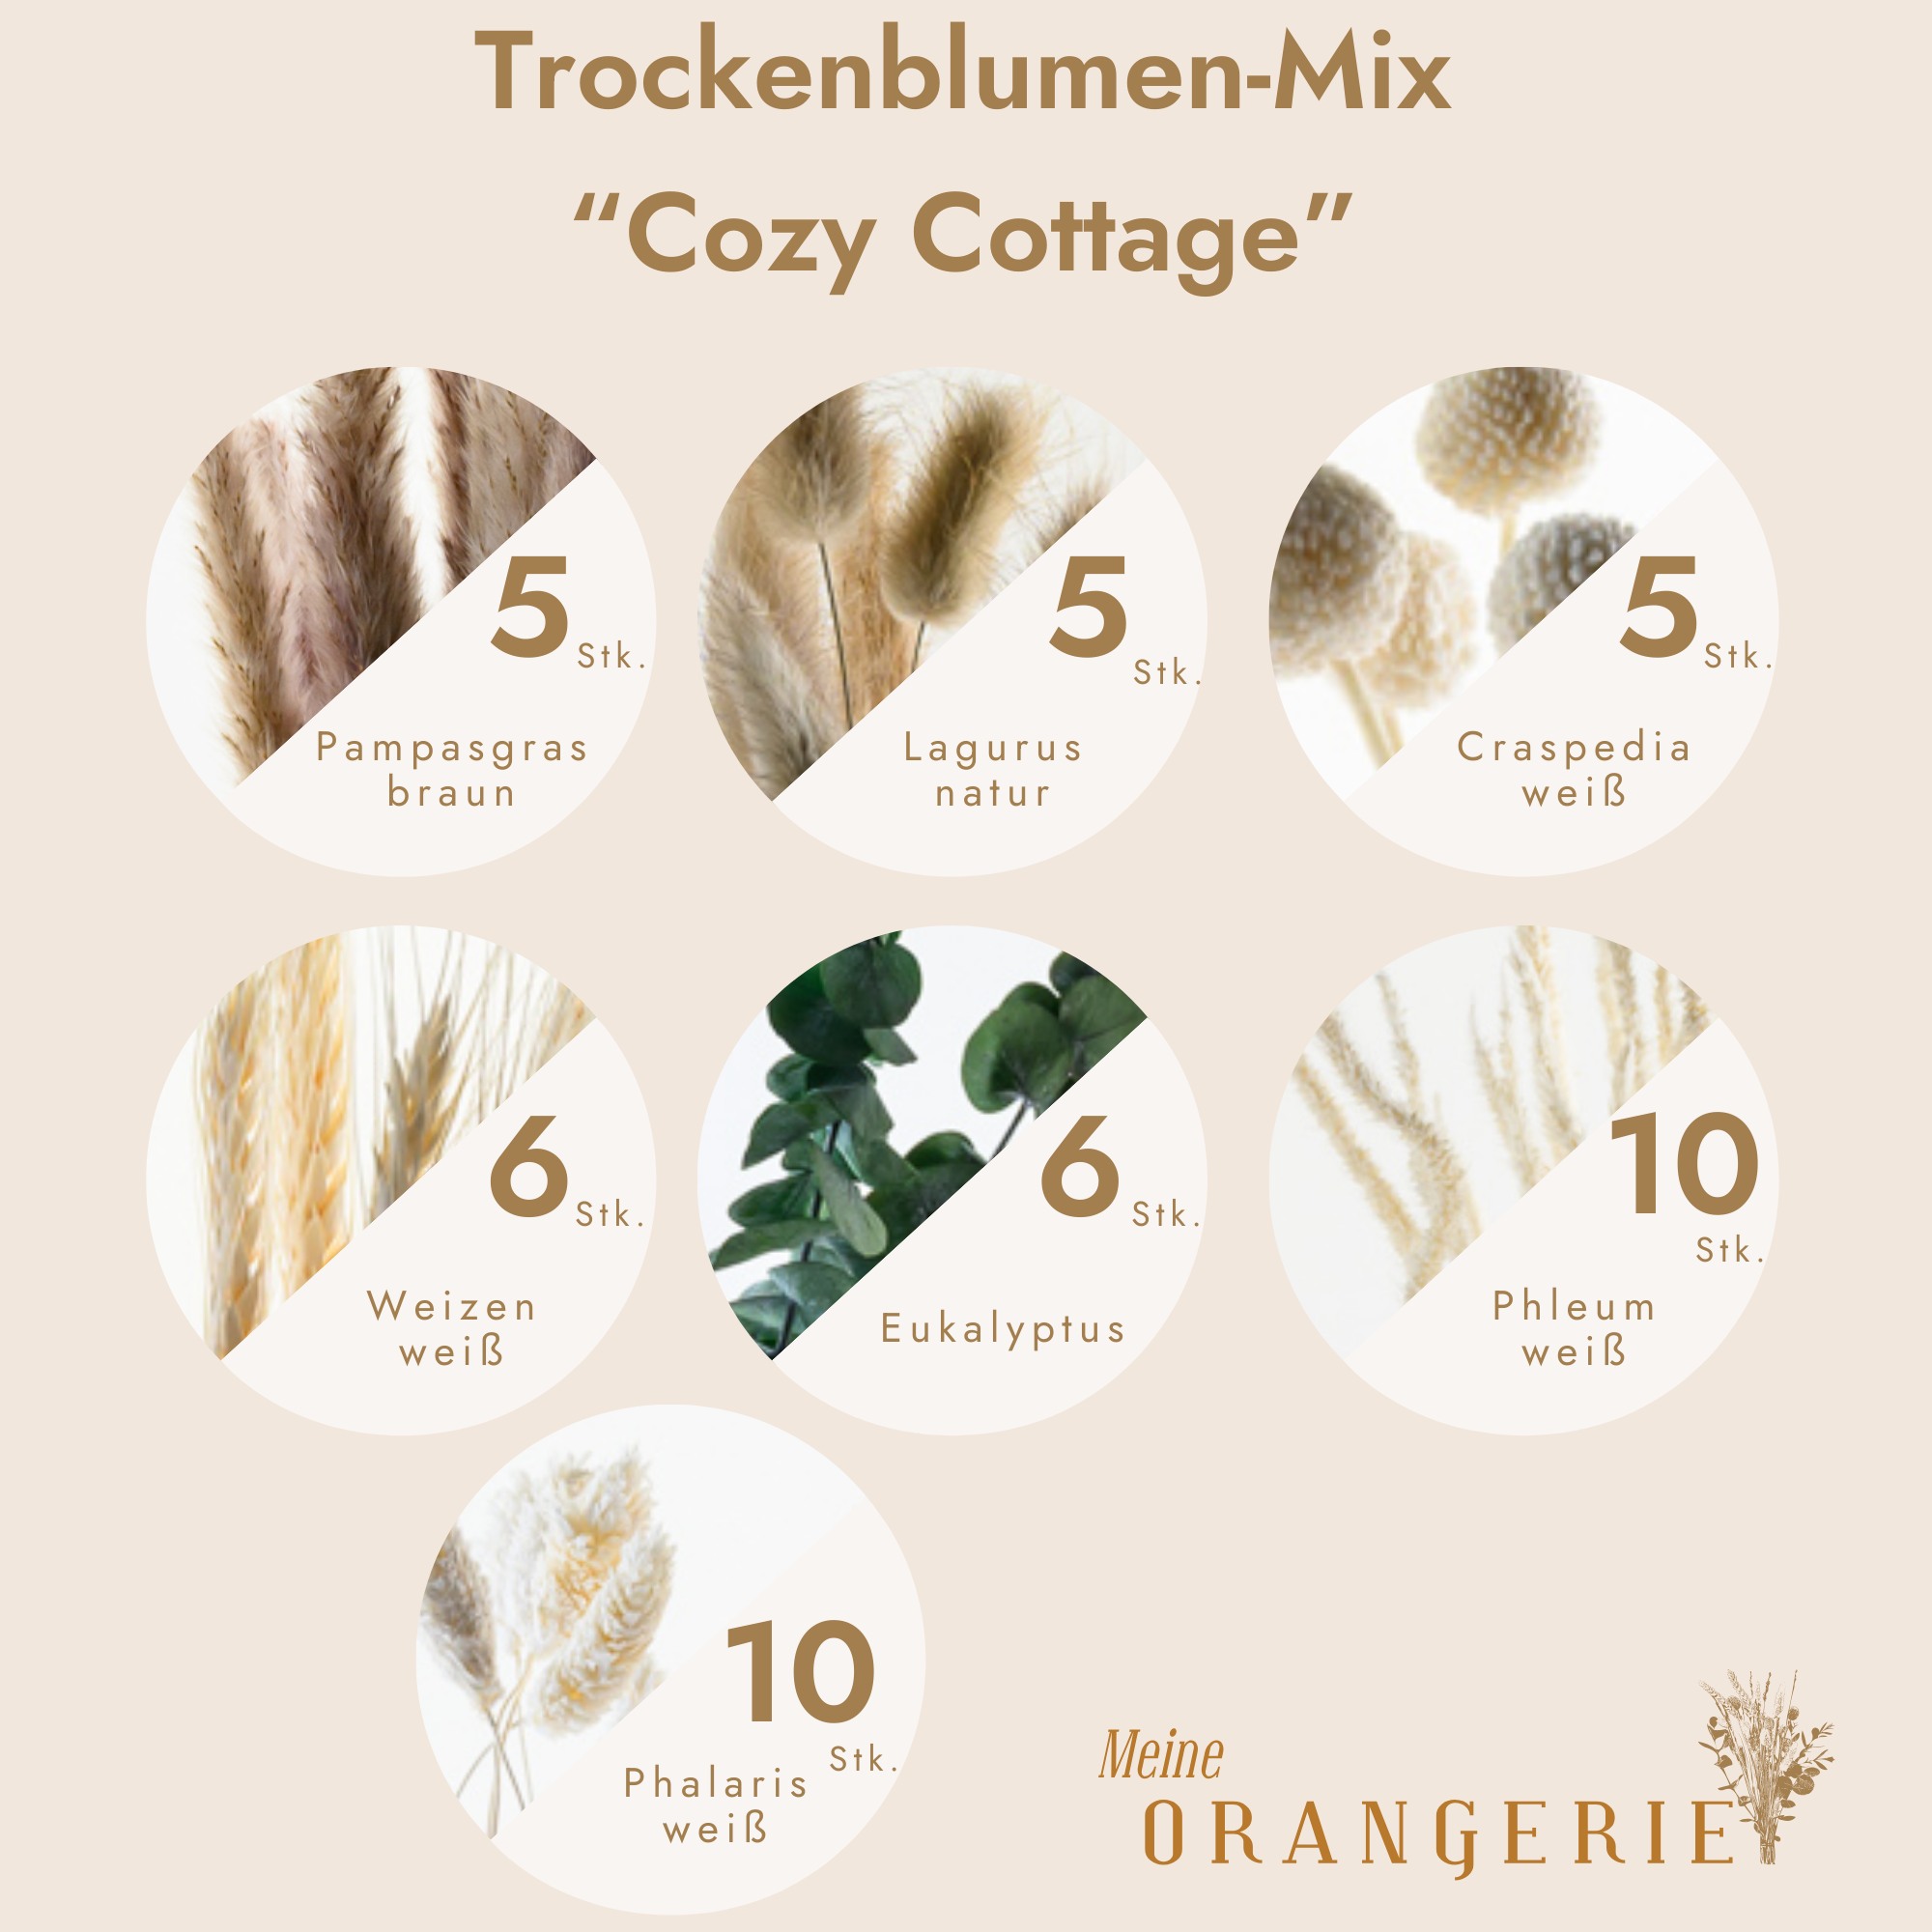 Trockenblumen-Mix "Cozy Cottage"